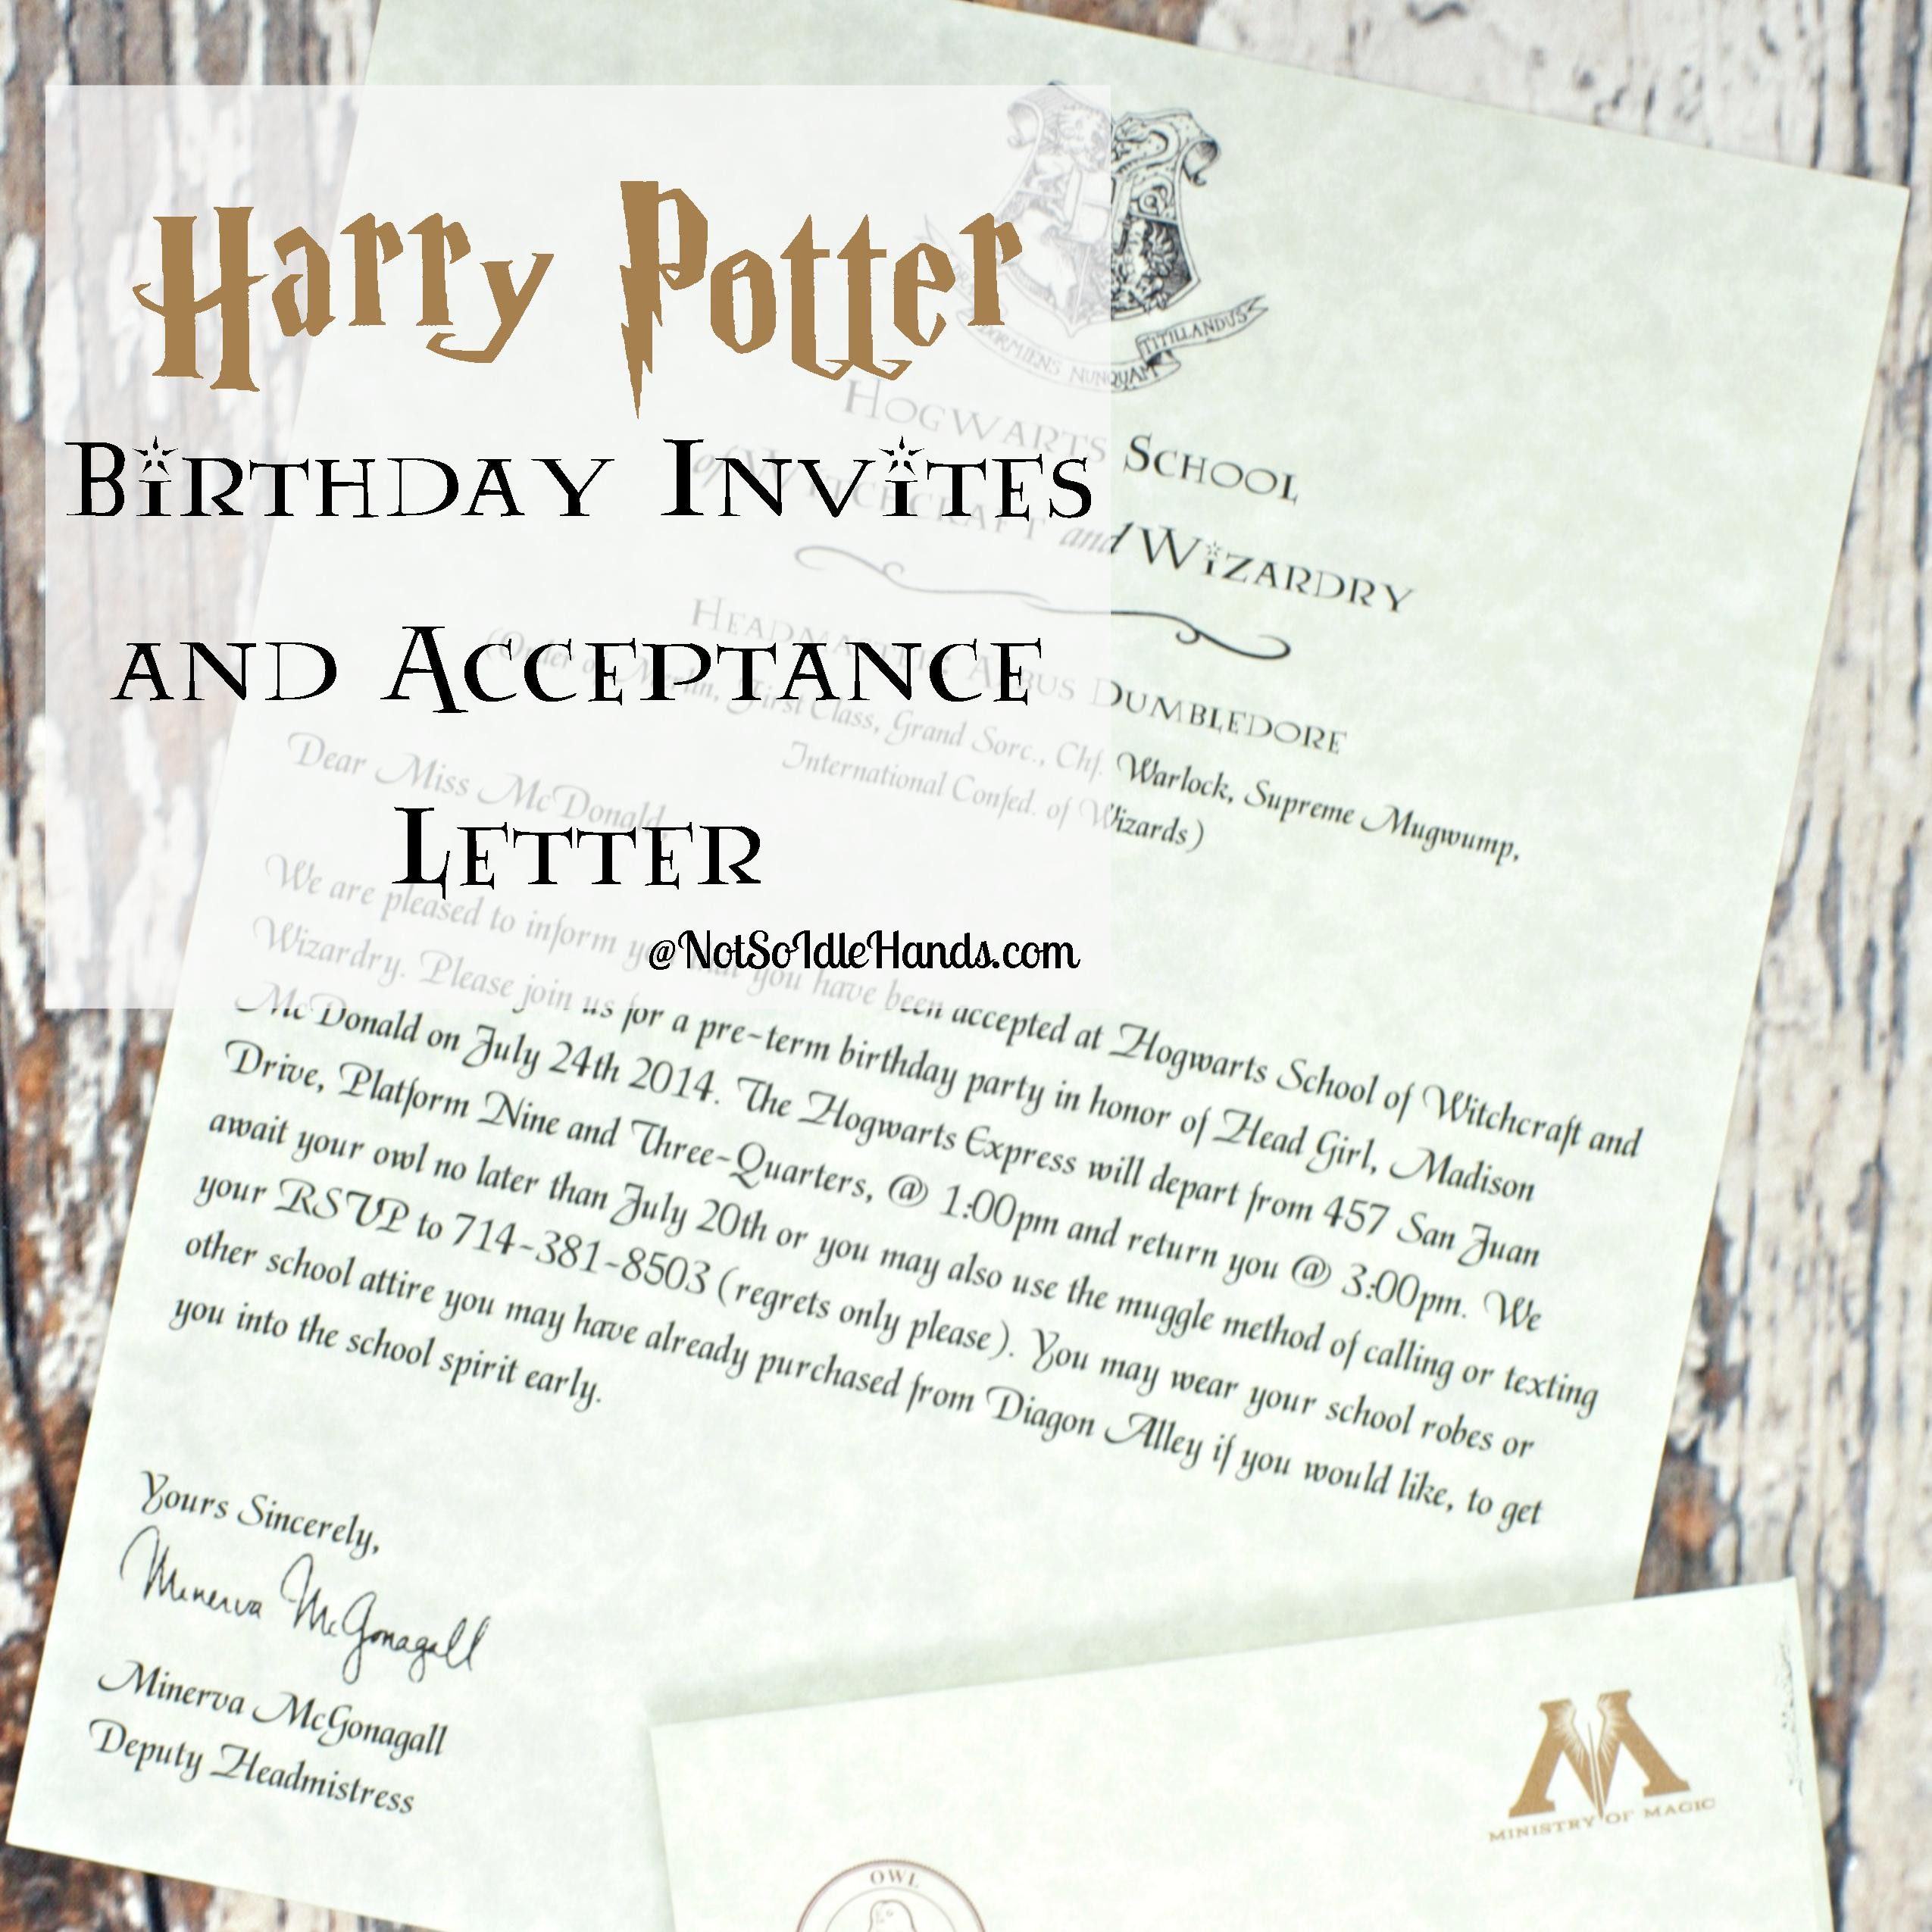 Harry Potter Birthday Invitations
 Harry Potter Birthday Invitations and Authentic Acceptance